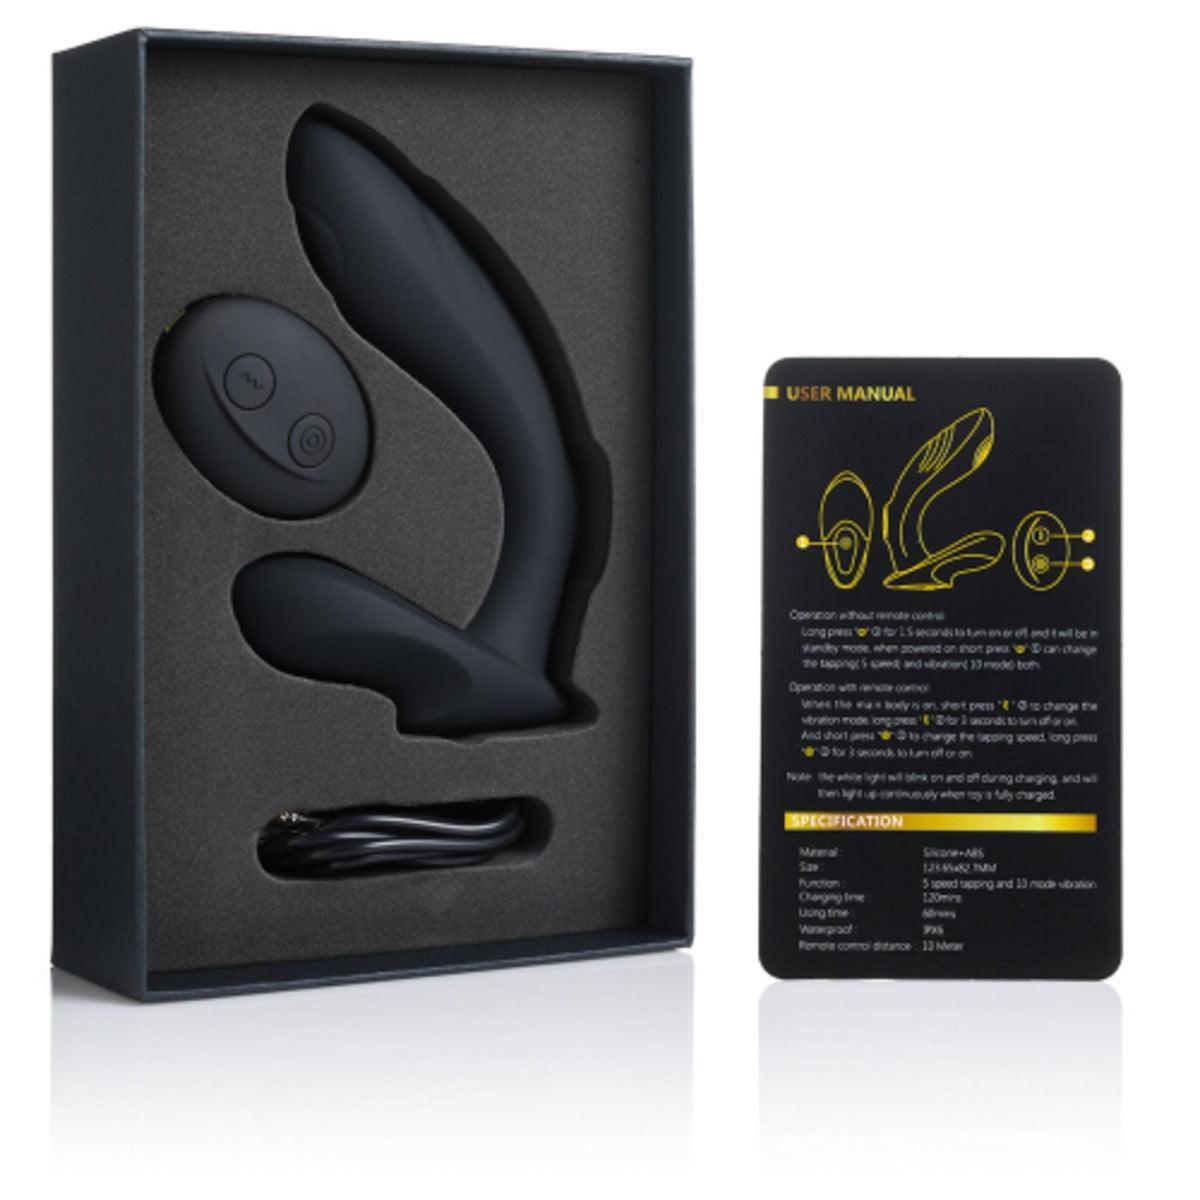 INTY Toys - Rebel Prostate Massager Vibrator with Remote Black